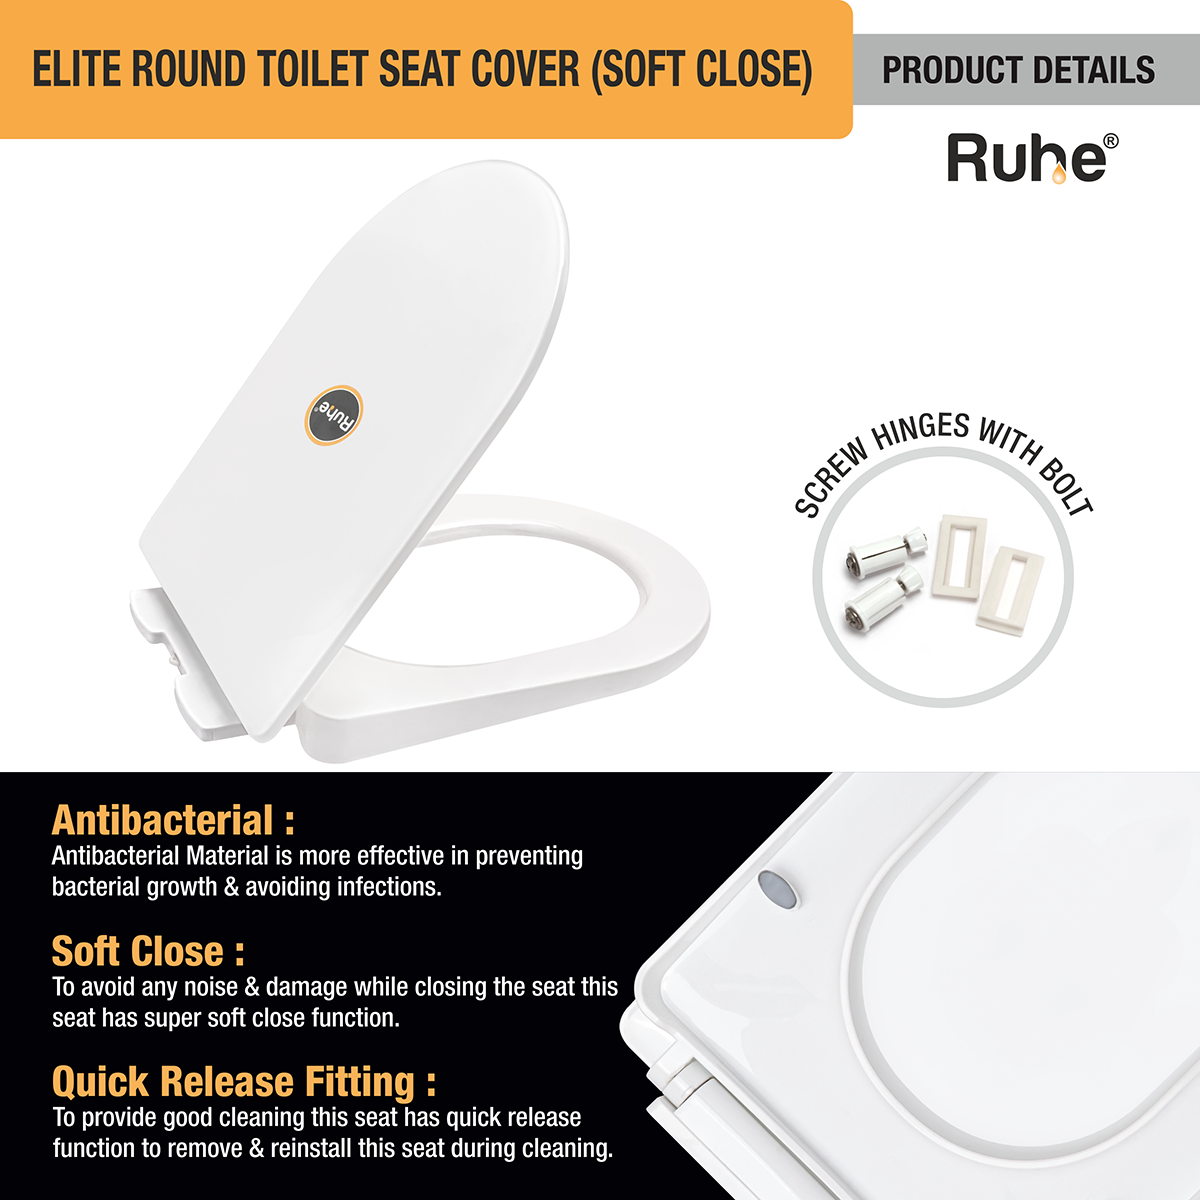 Elite Round Toilet Seat Cover (Soft Close) product details